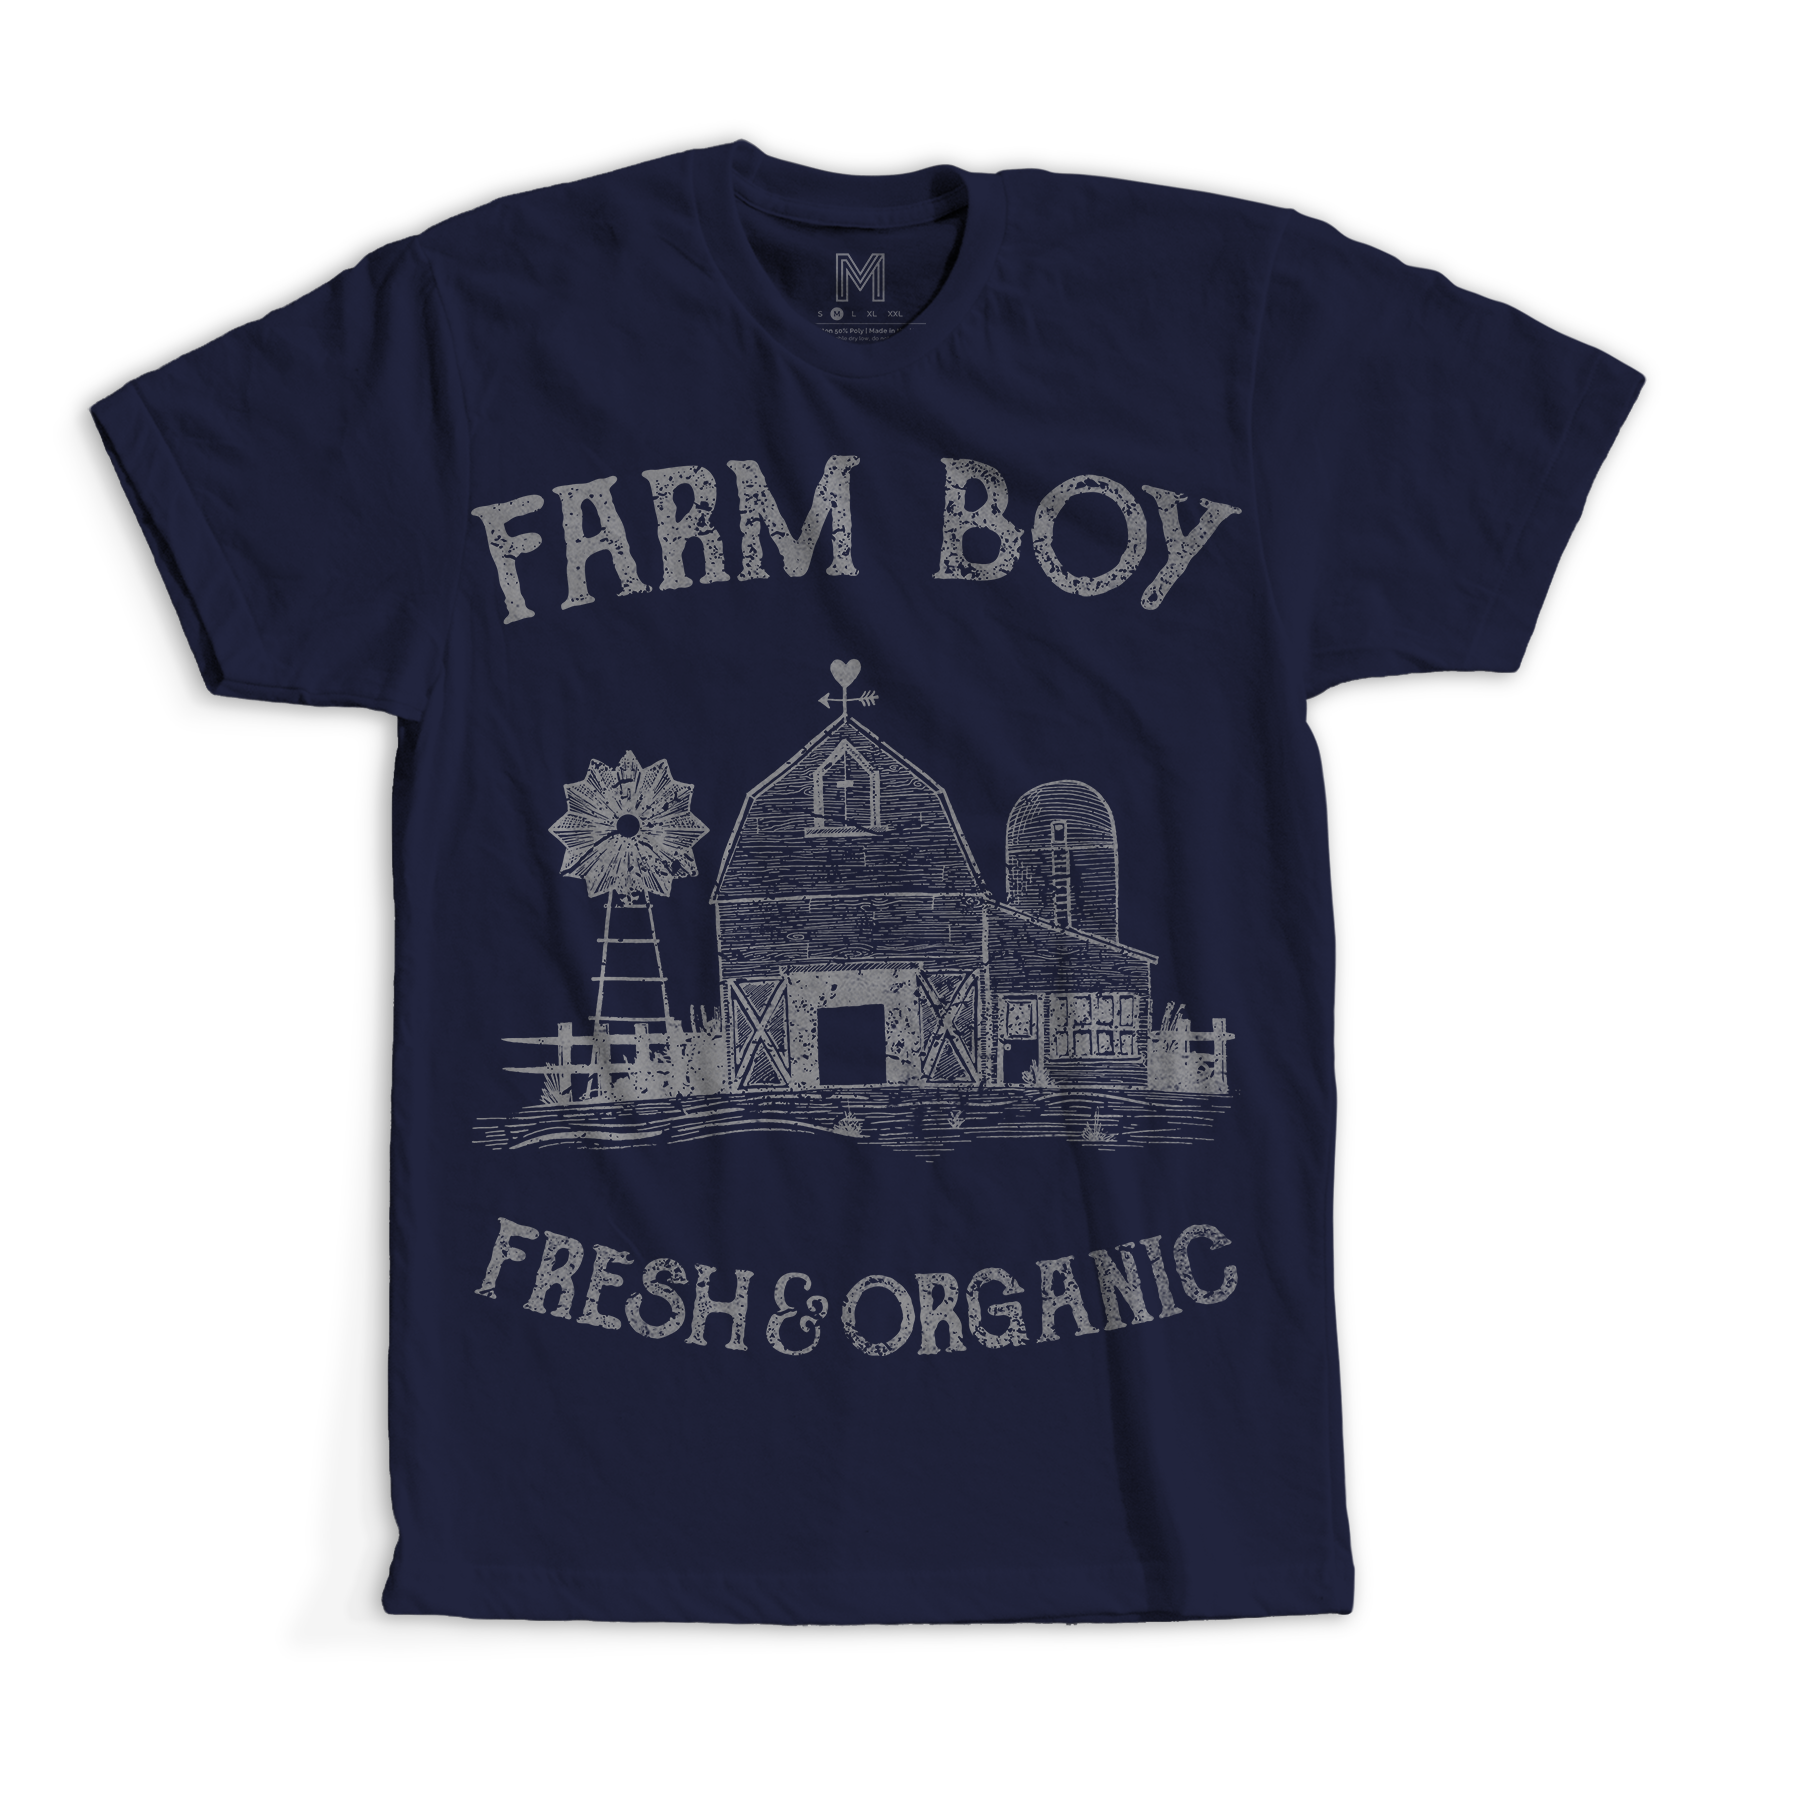 Farm boy fresh and organic farmer Men's t-shirt - Premium t-shirt from MyDesigns - Just $19.95! Shop now at Lees Krazy Teez